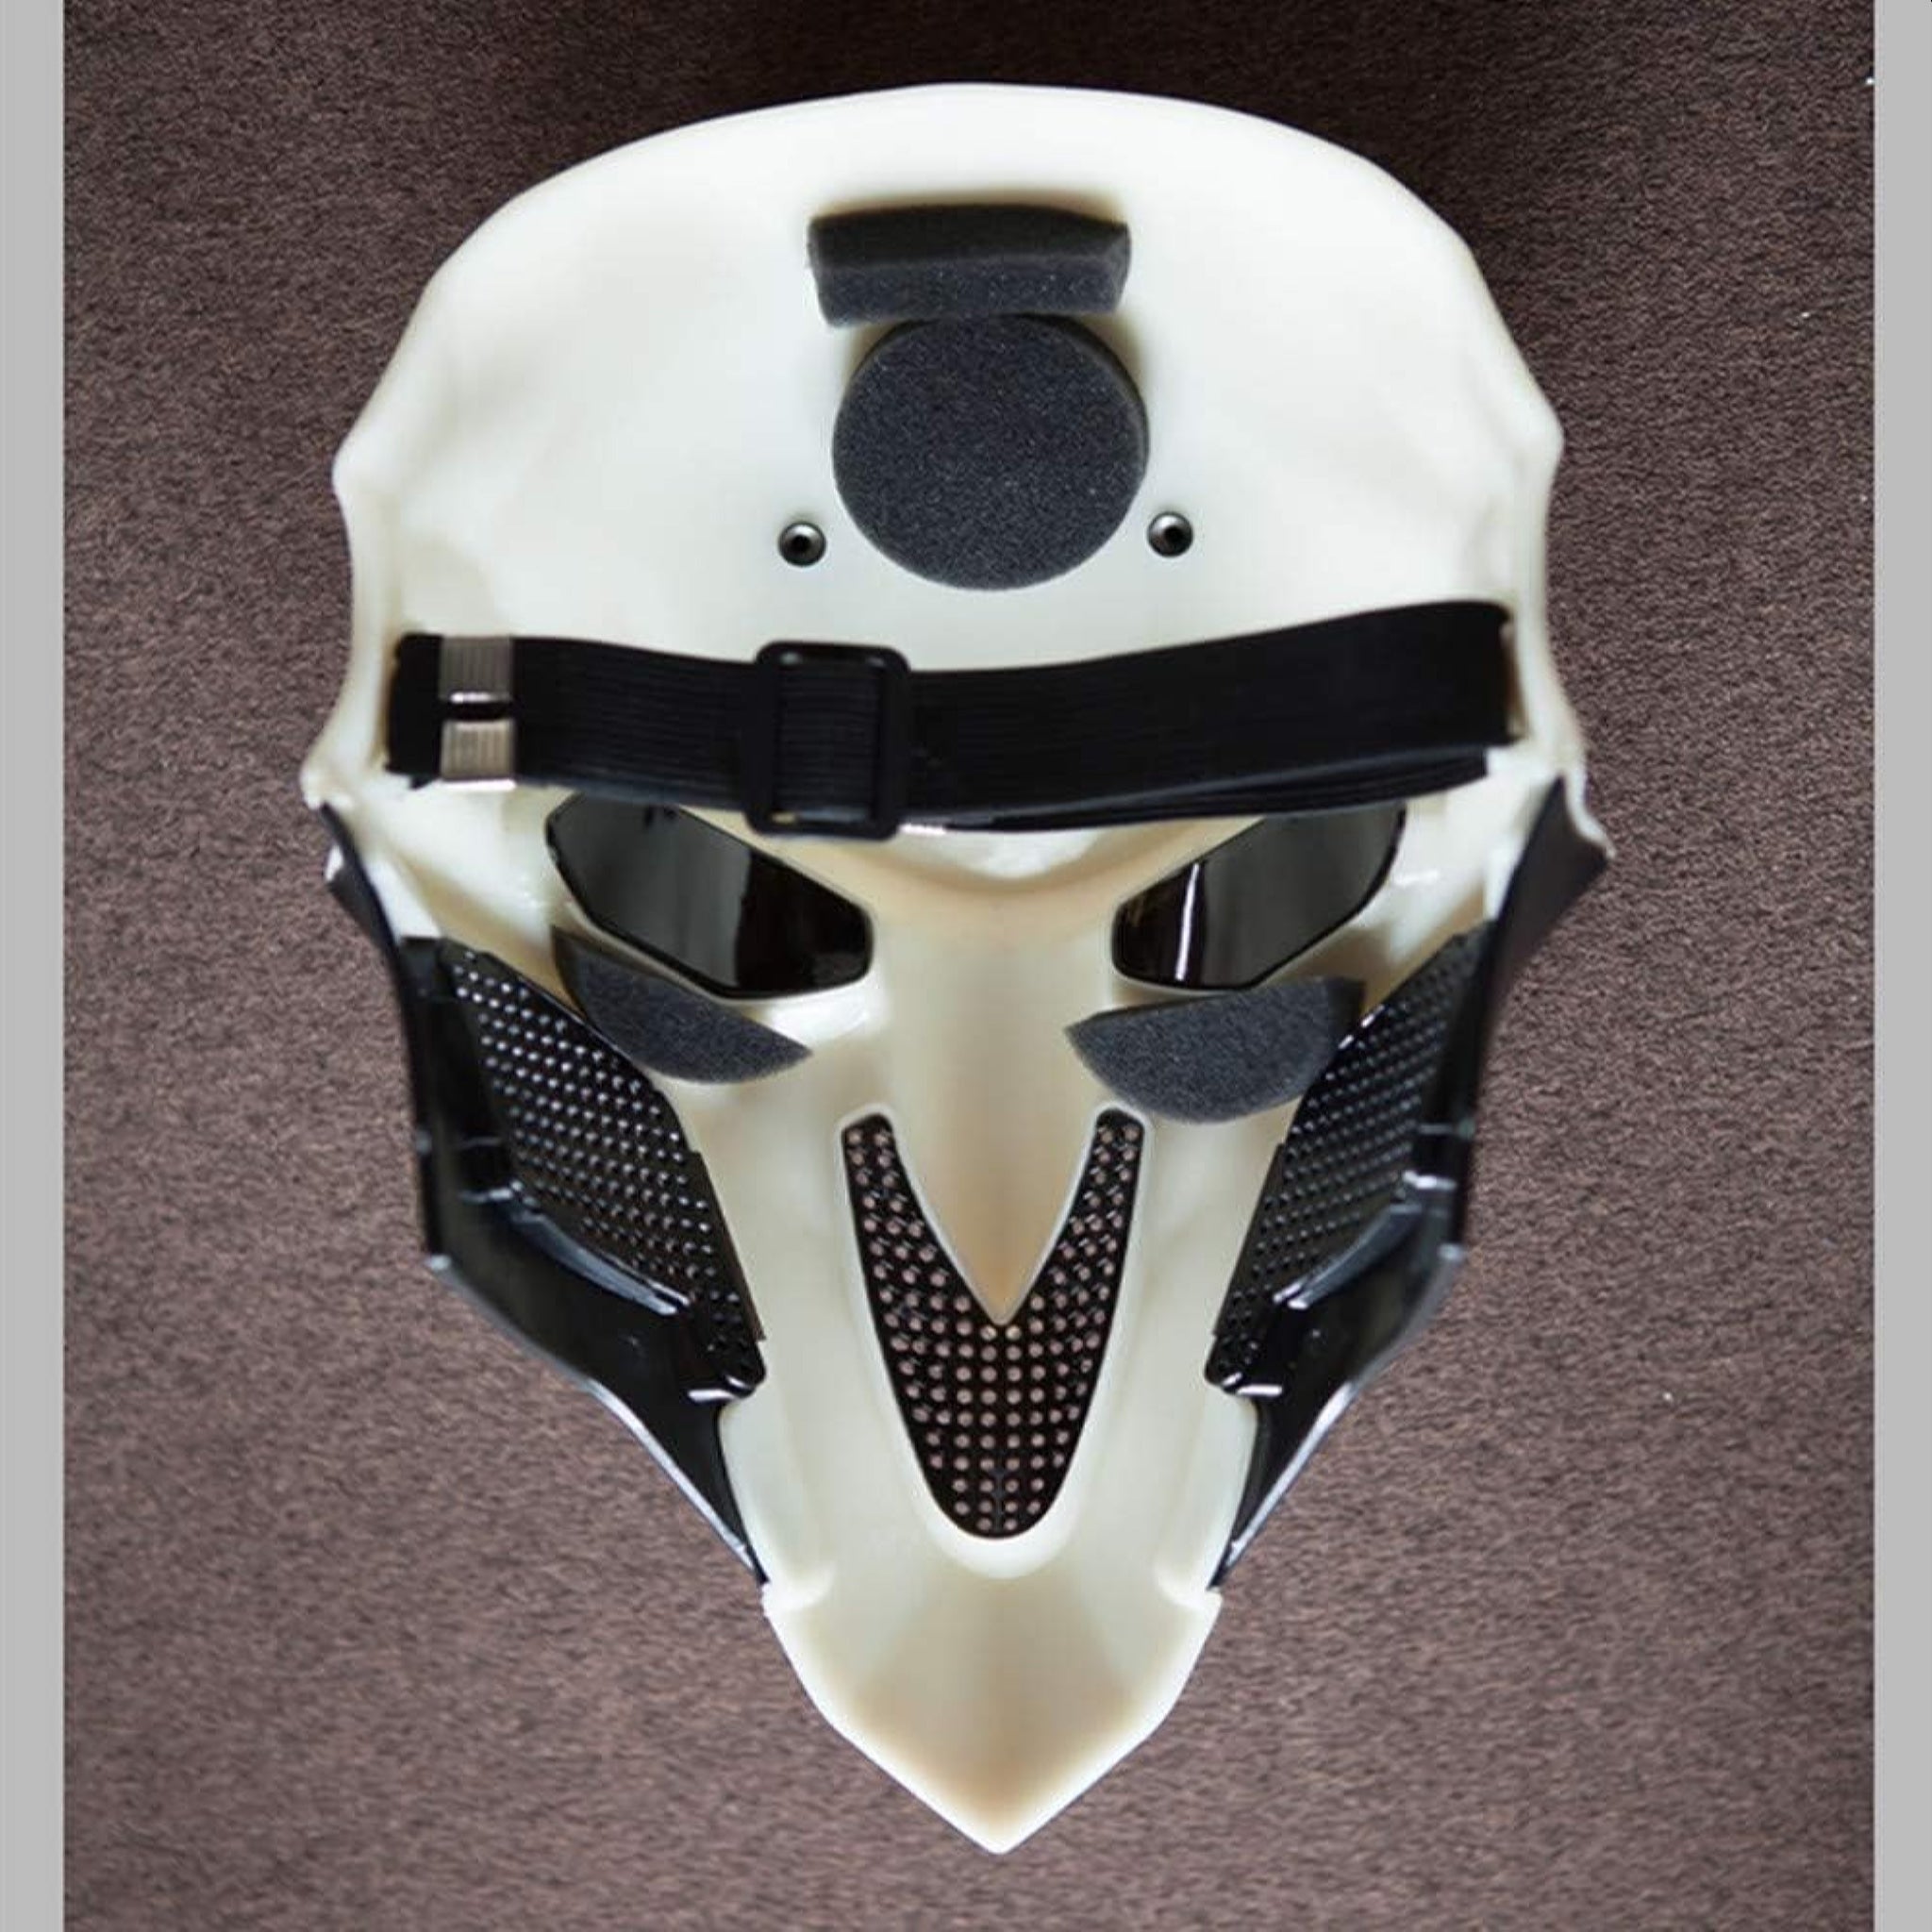 Overwatch Reaper Mask for Cosplay, Halloween & Fancy Dress CH-B139